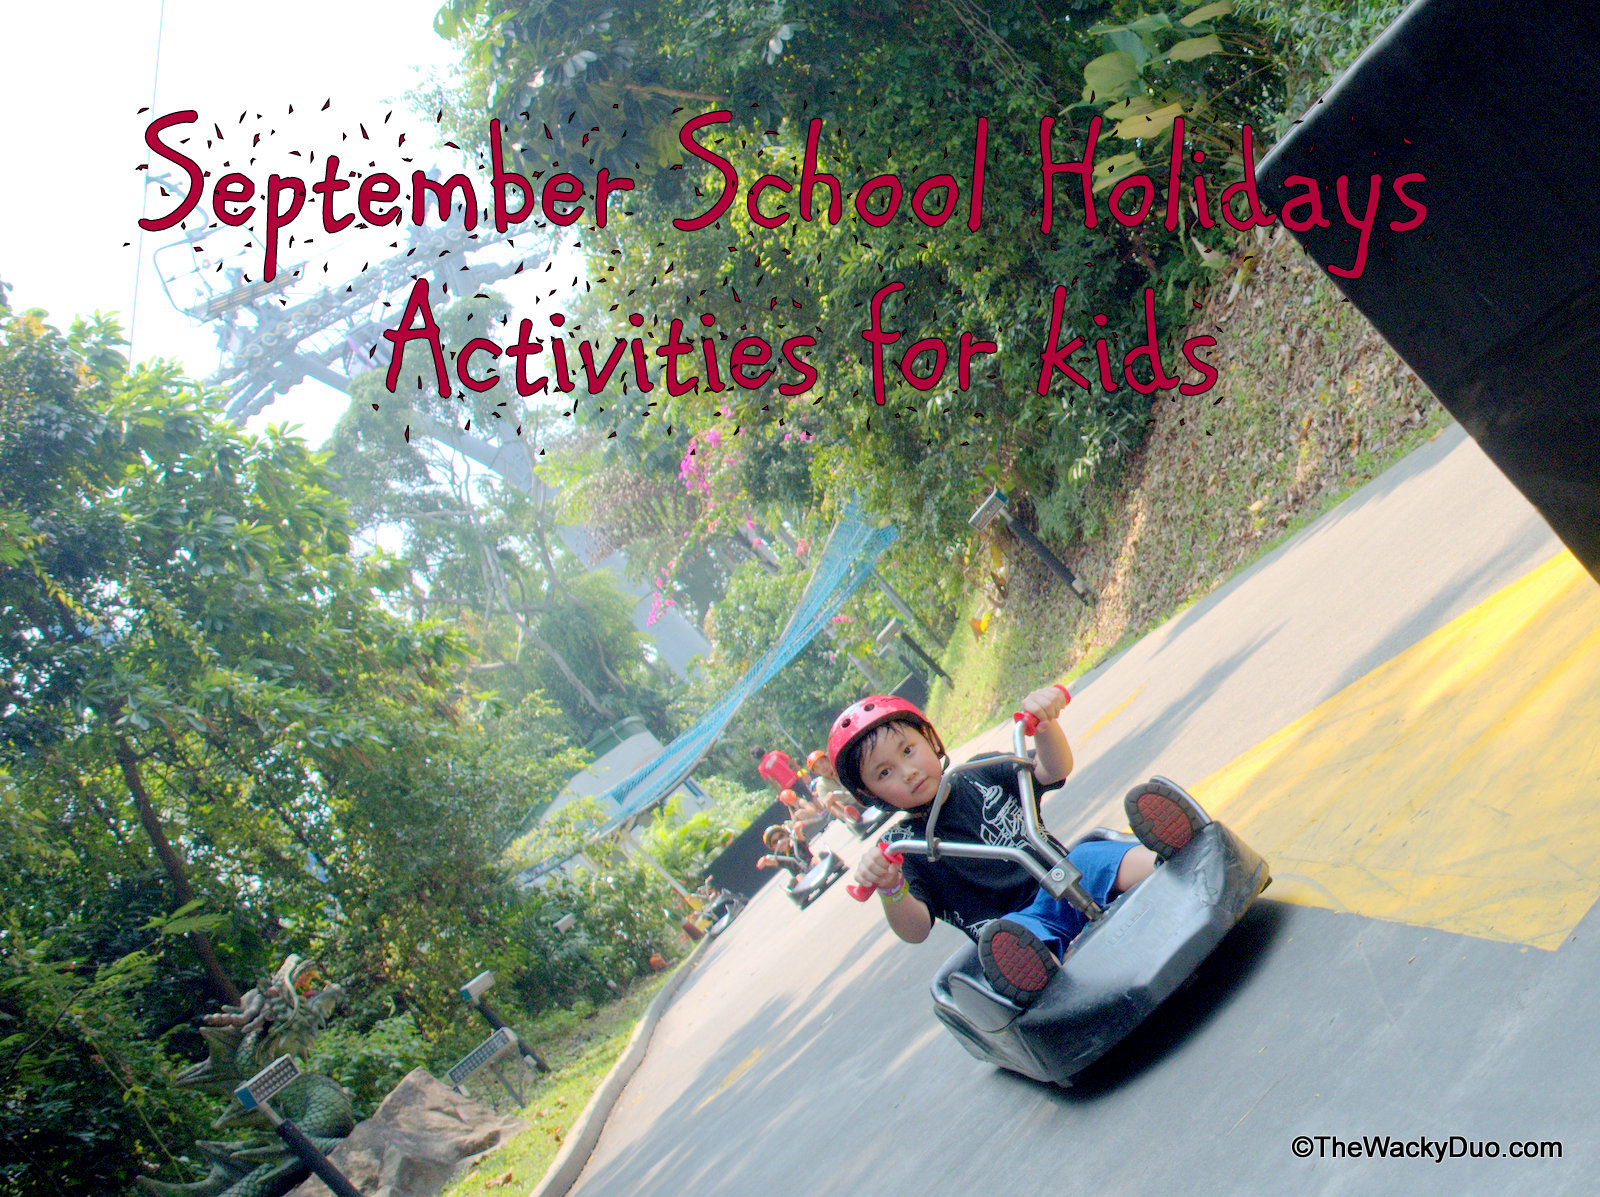 September school holiday activities for kids 2015